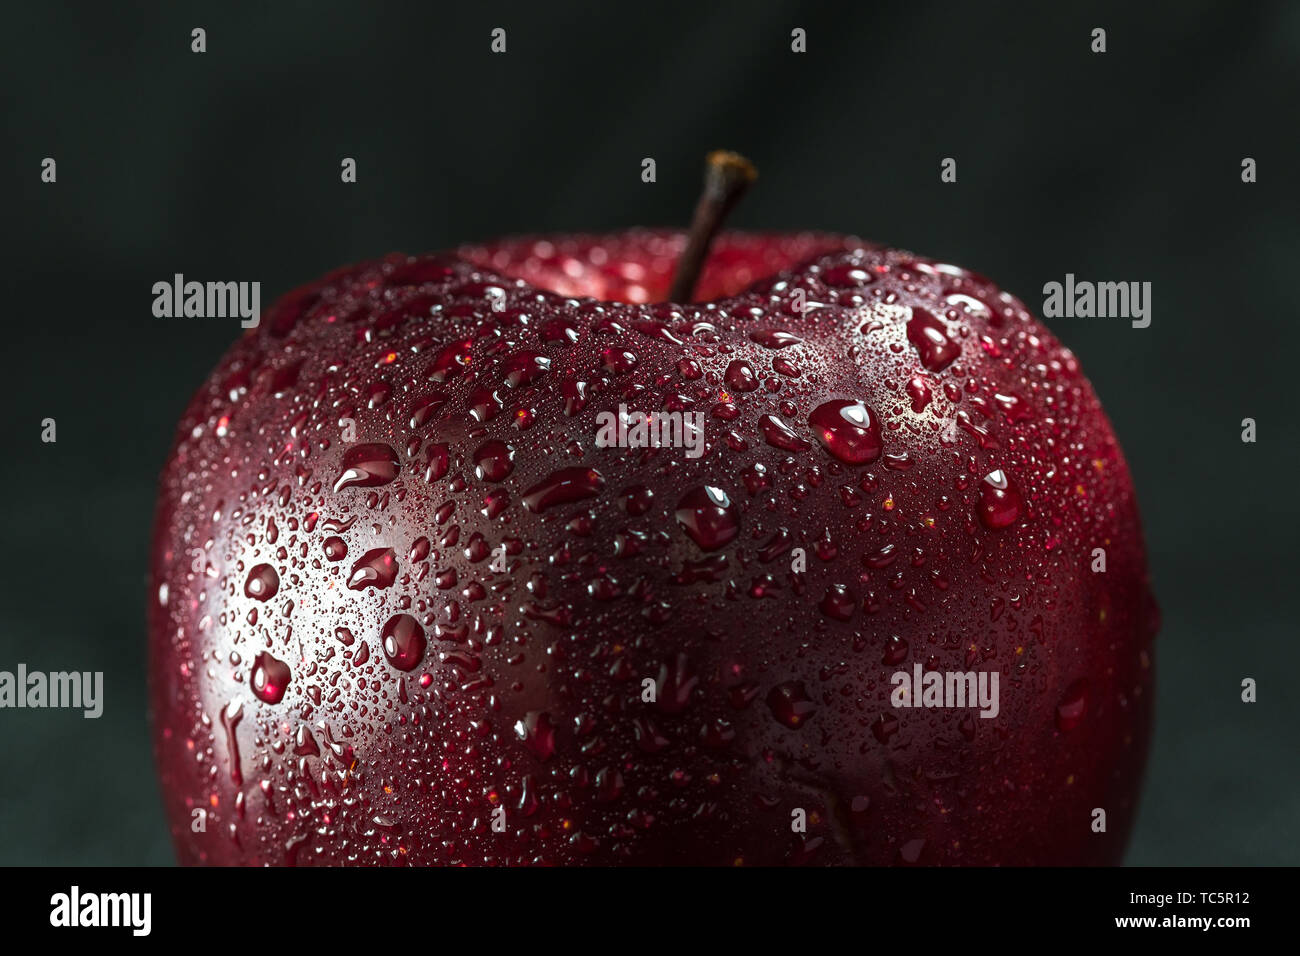 Apple Stock Photo